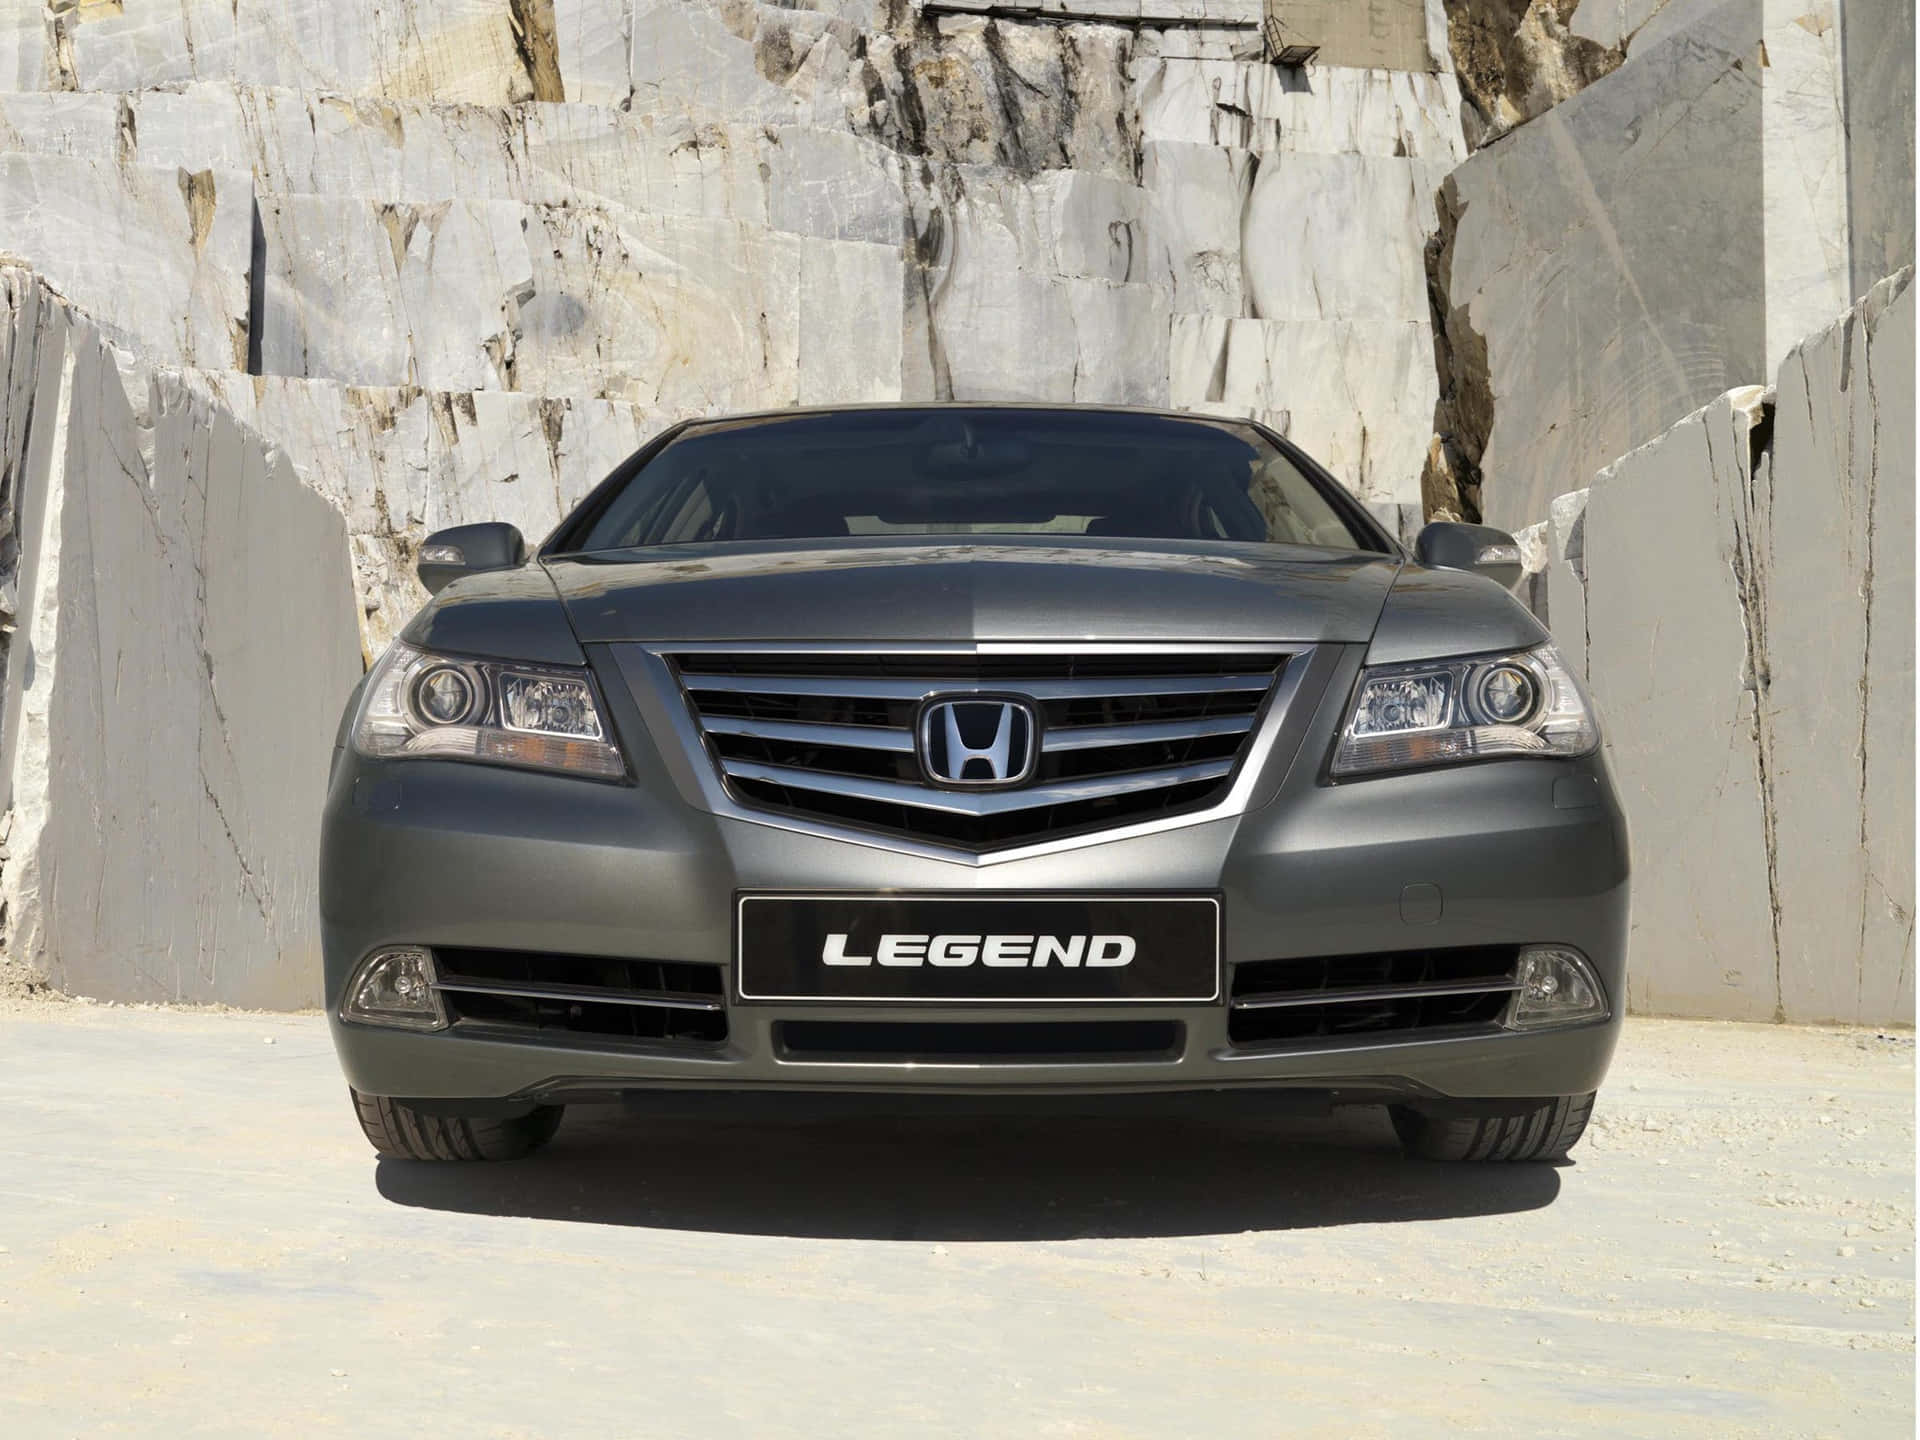 Sleek and Stylish Honda Legend in Action Wallpaper